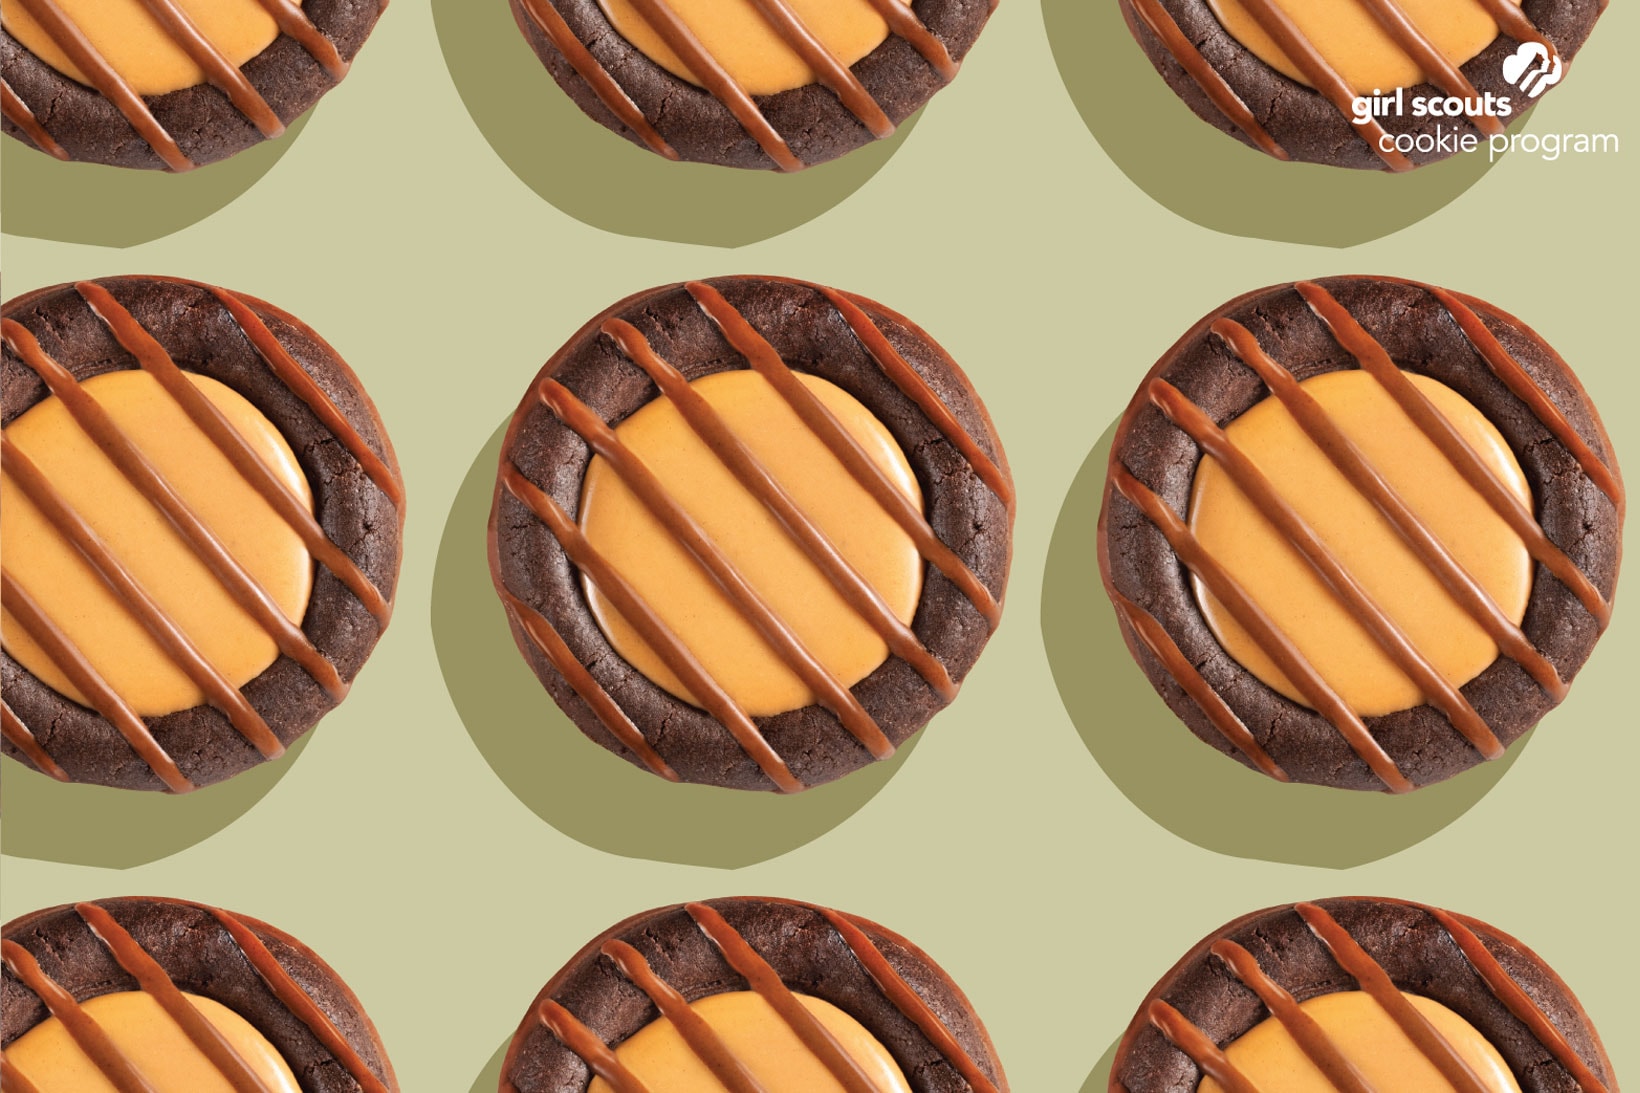 girl scouts cookies salted caramel brownie chocolate flavor adventurefuls 2022 info